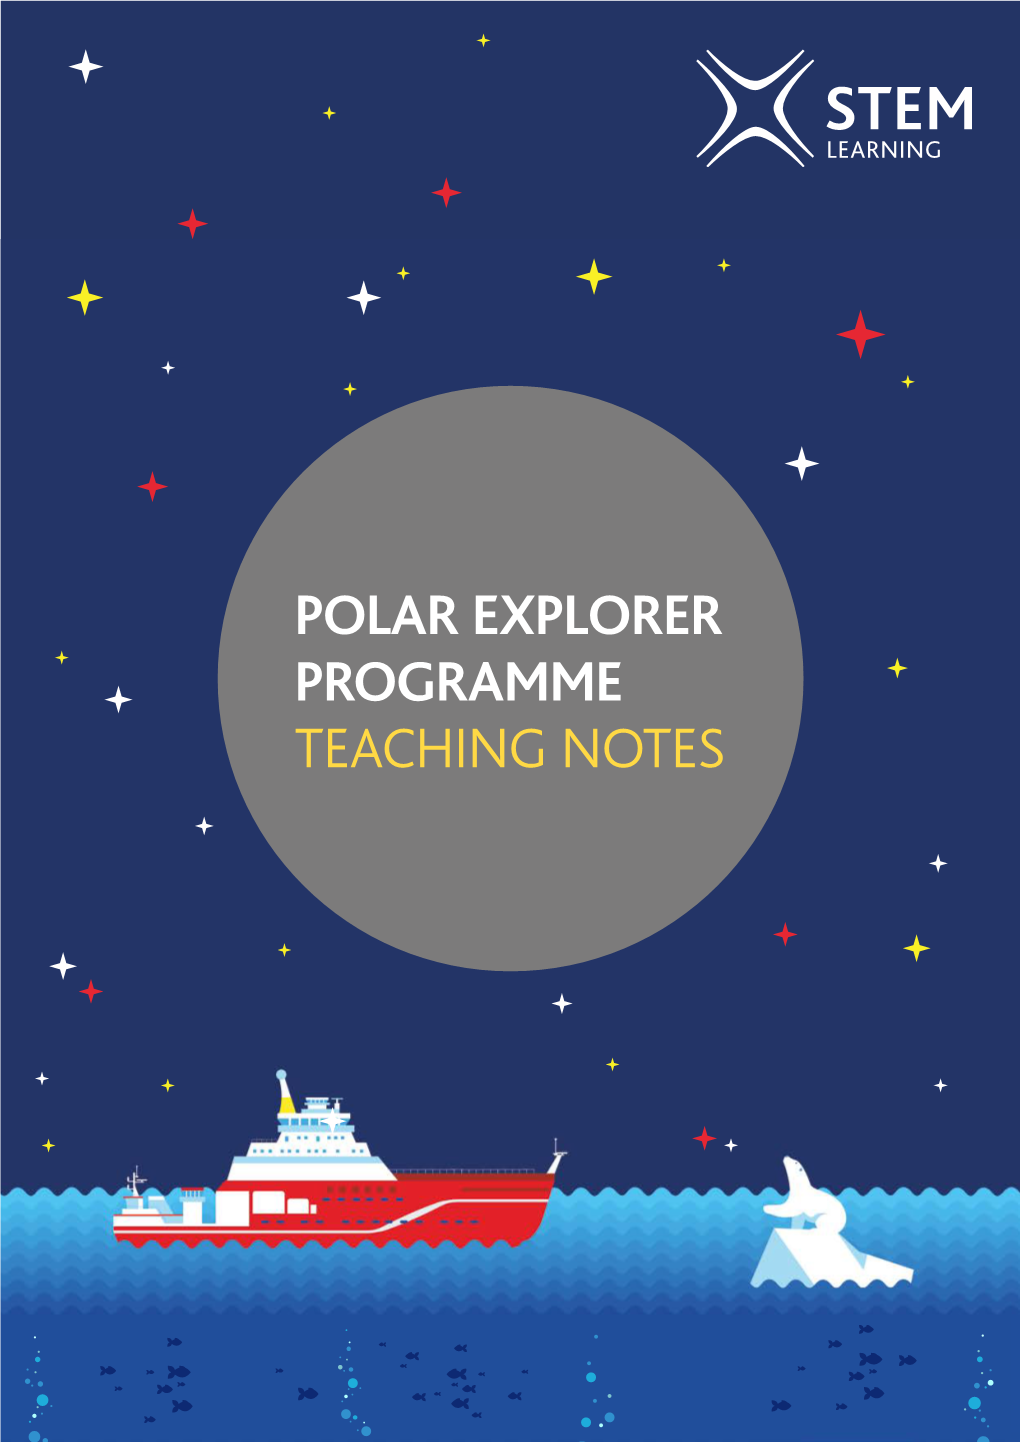 Polar Explorer Programme Teaching Notes Welcome to the Polar Explorer Programme